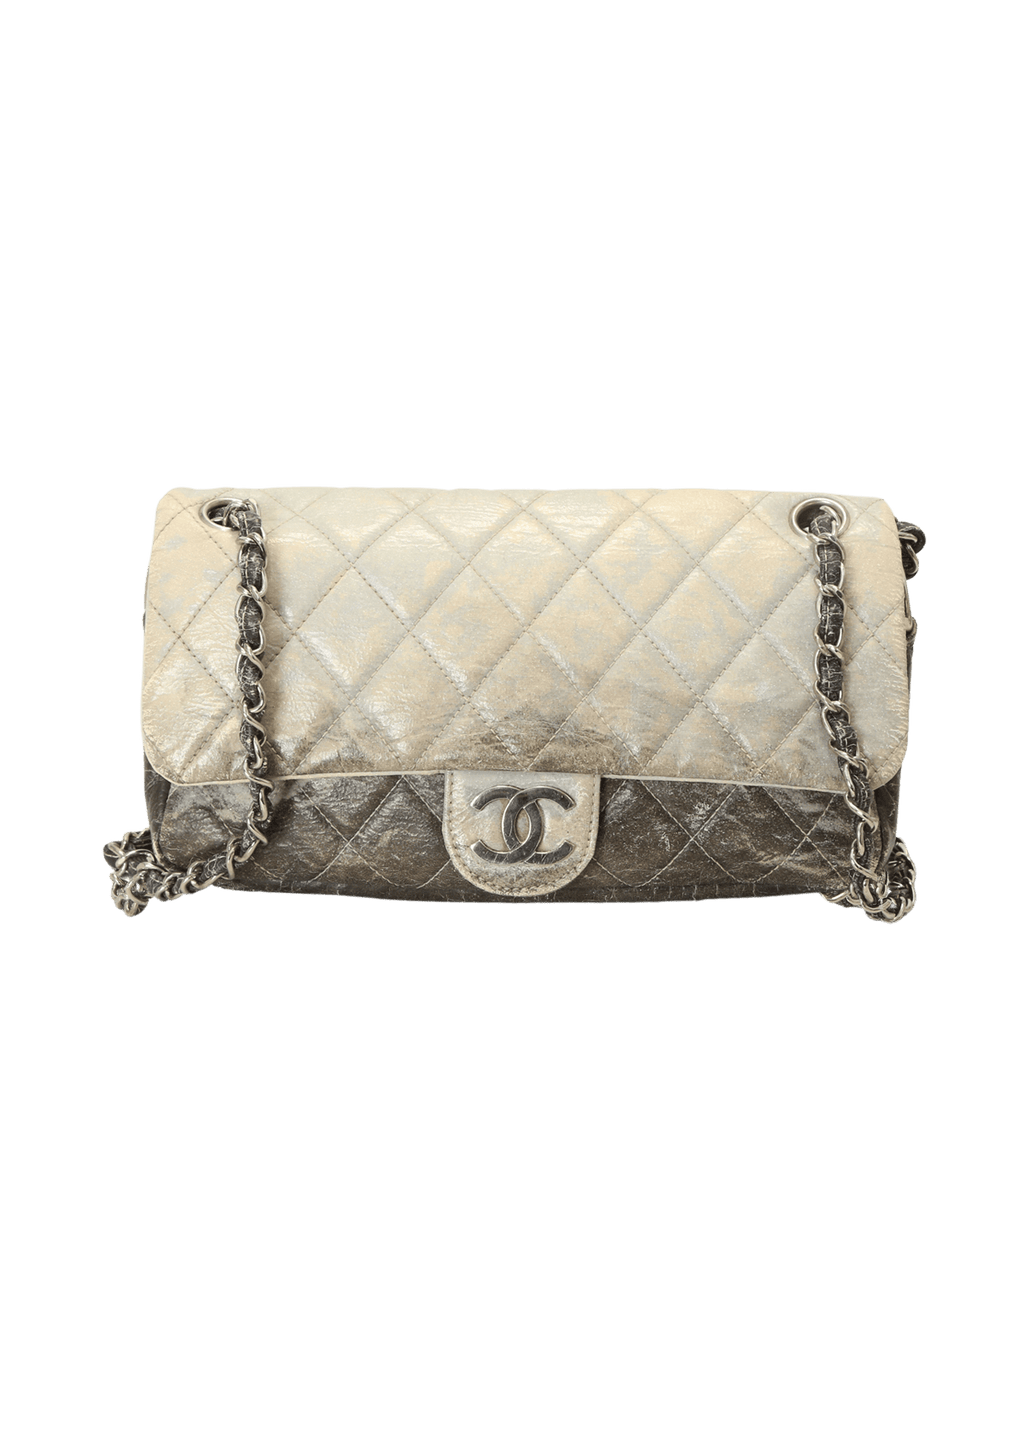 Bolsa Chanel Original Melrose Degrade Flap Bicolor Feminina